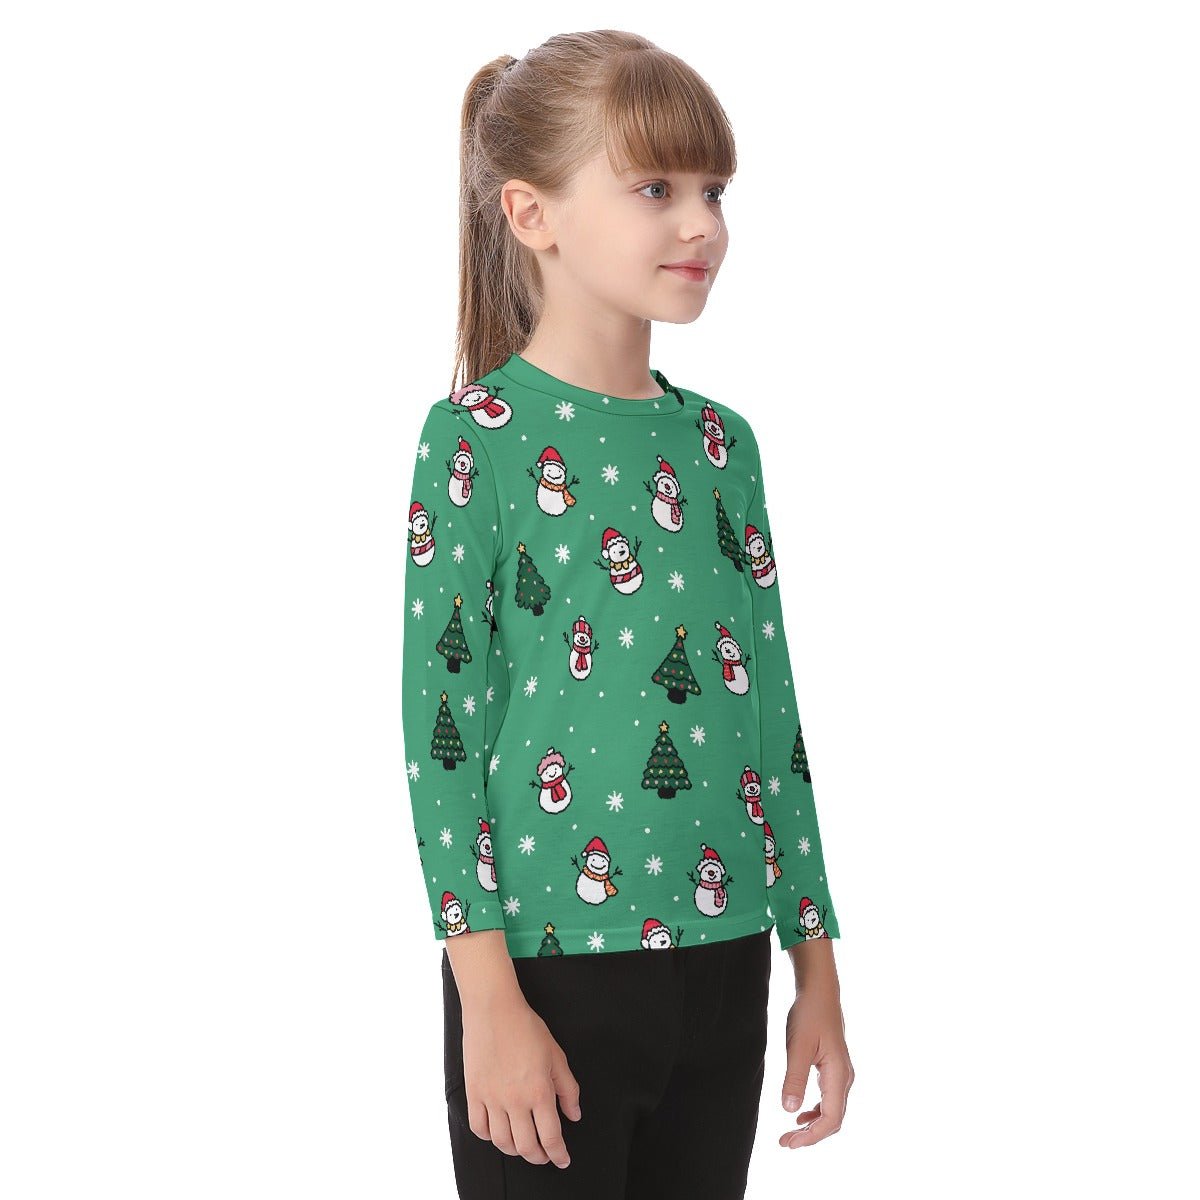 Kid's Long Sleeve Christmas T-shirt - Green Snowman - Festive Style